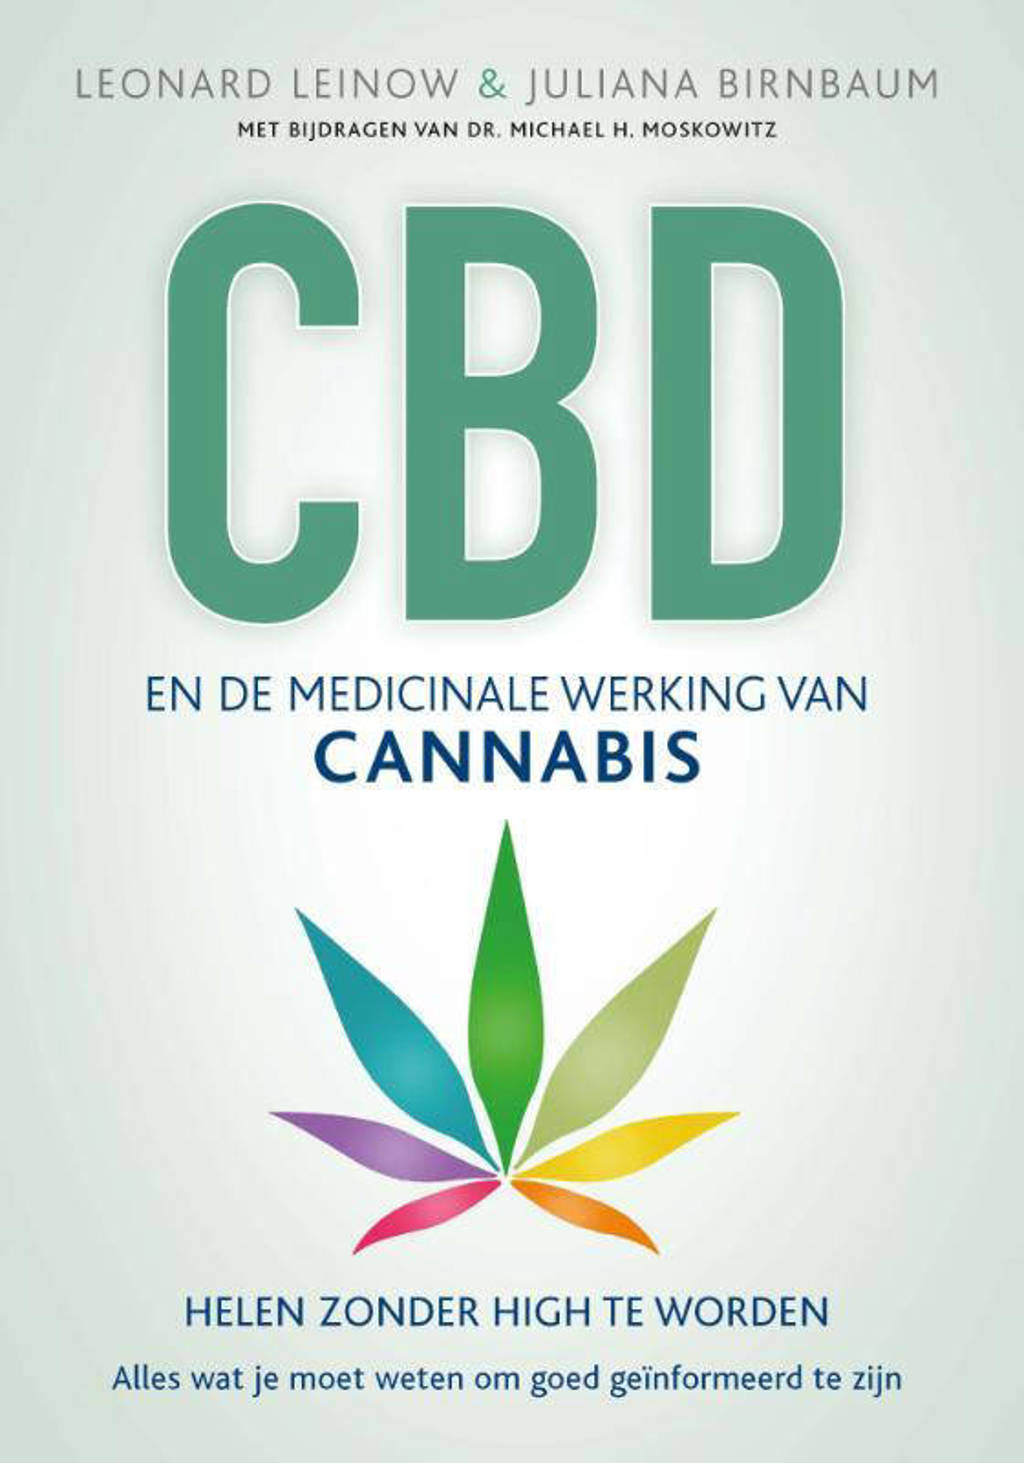 CBD: CBD en de medicinale werking van cannabis - Leonard Leinow en Juliana Birnbaum